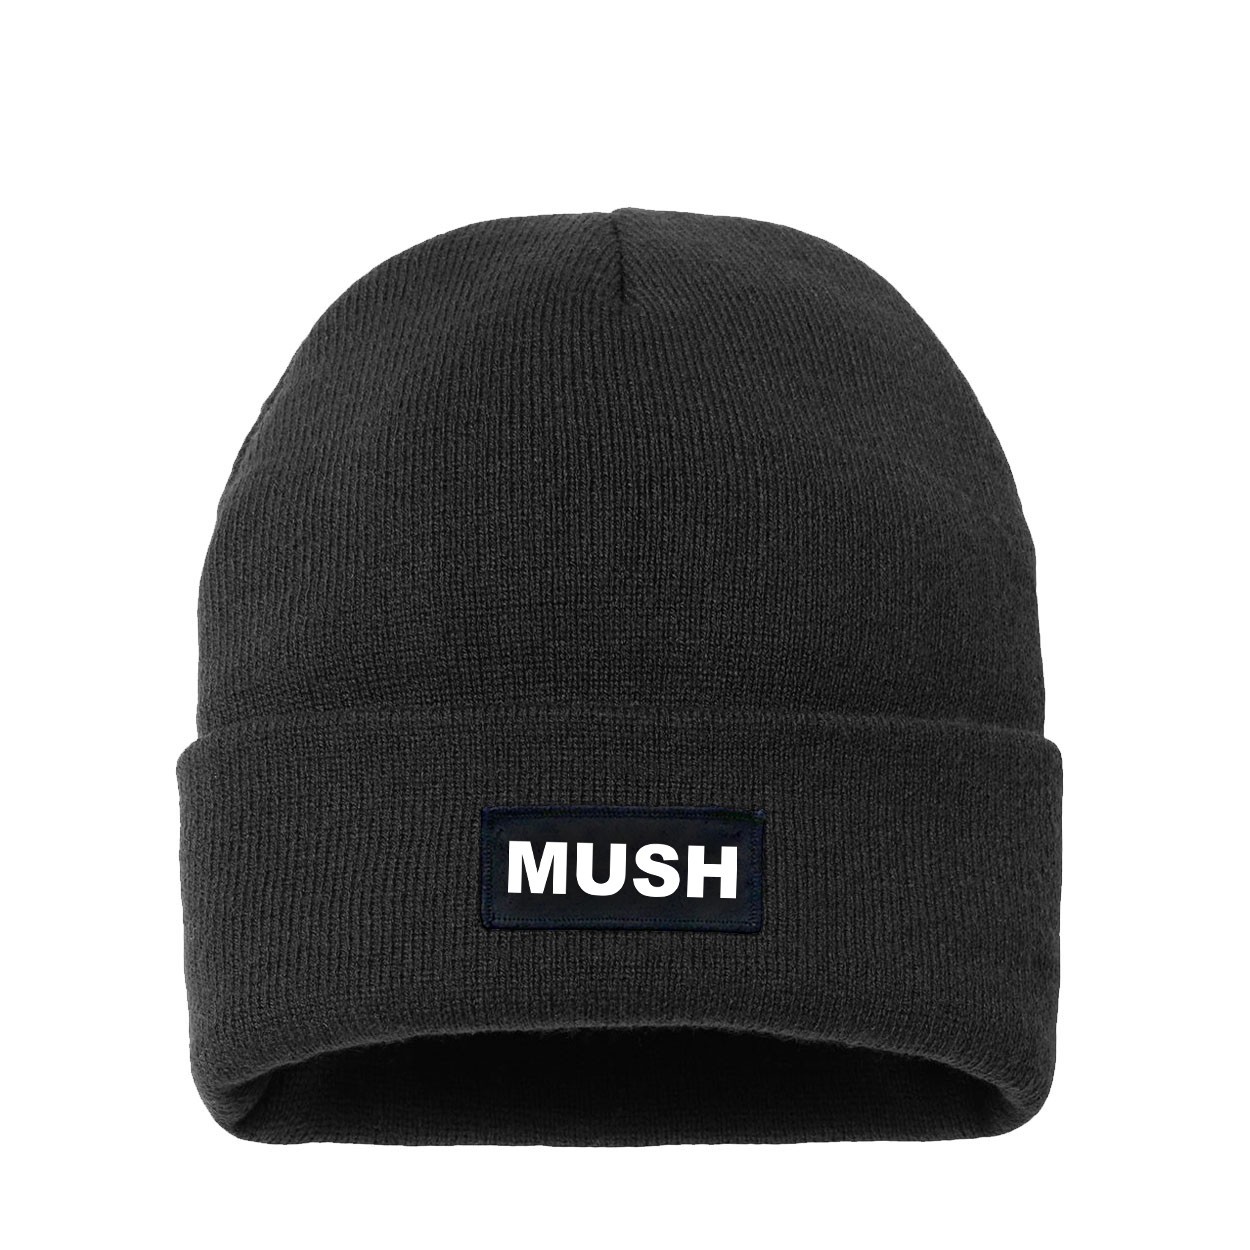 Mush Brand Logo Night Out Woven Patch Night Out Sherpa Lined Cuffed Beanie Black